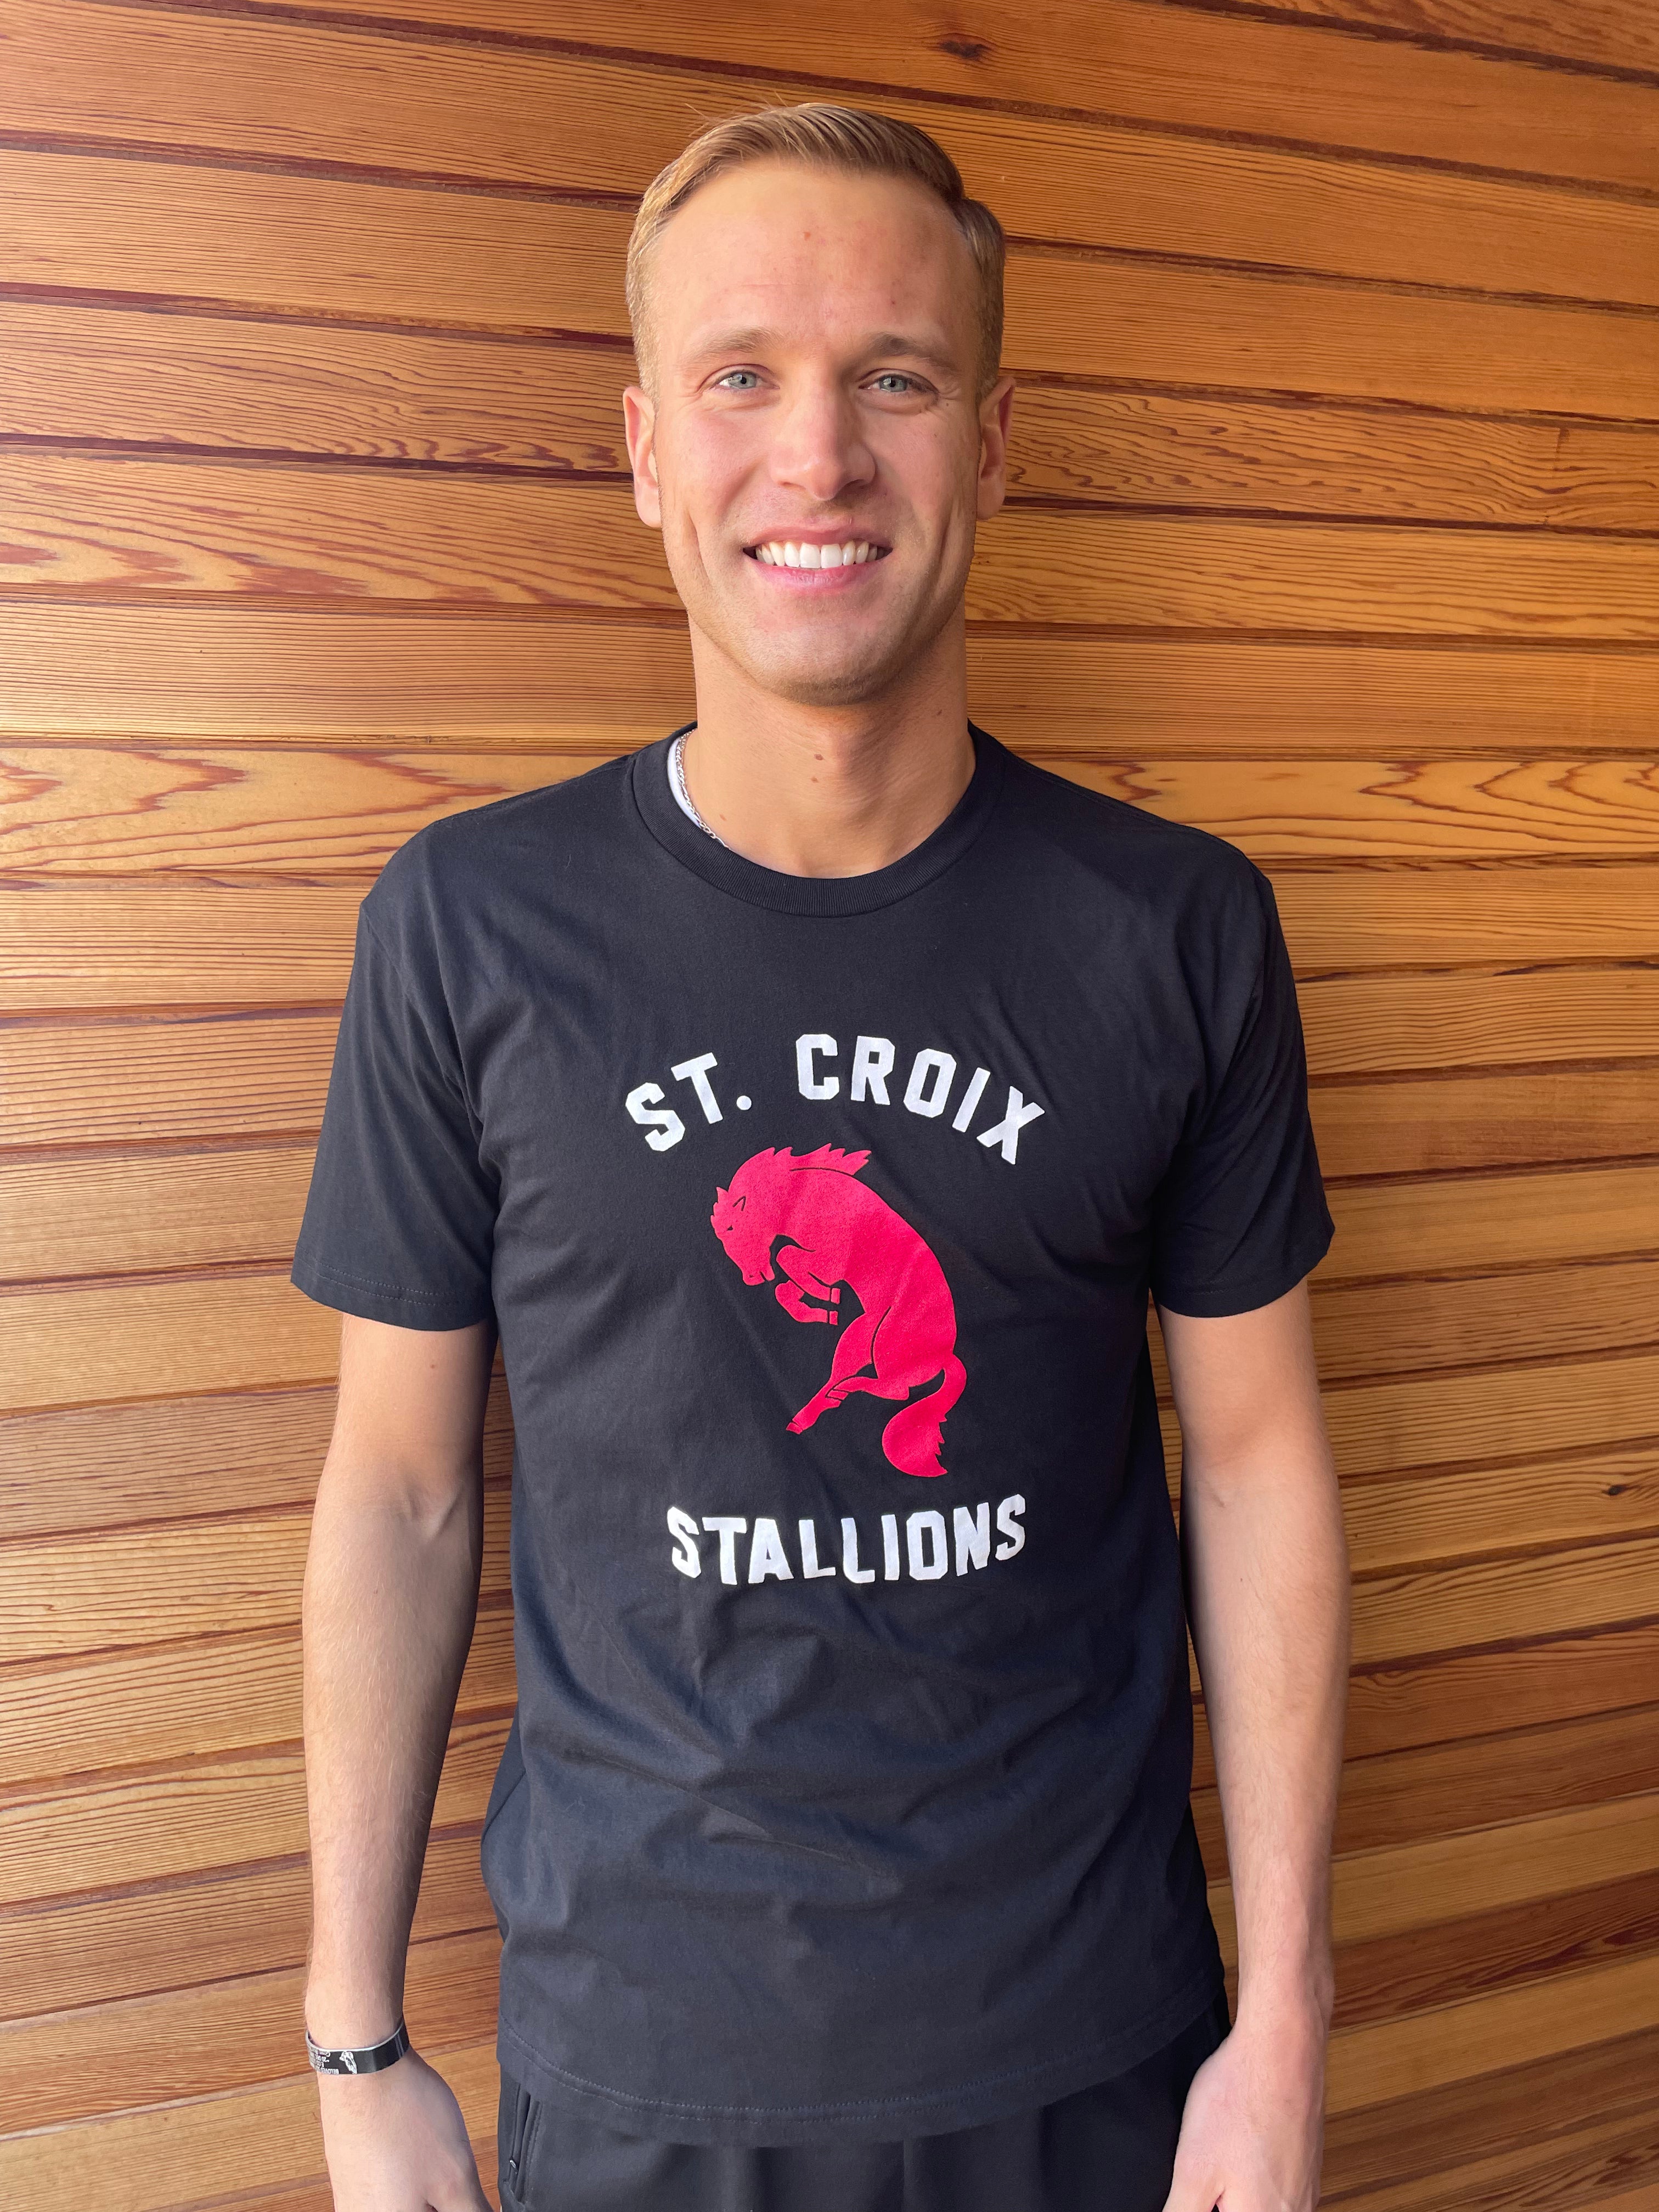 St. Croix Stallions - The Minnesotan